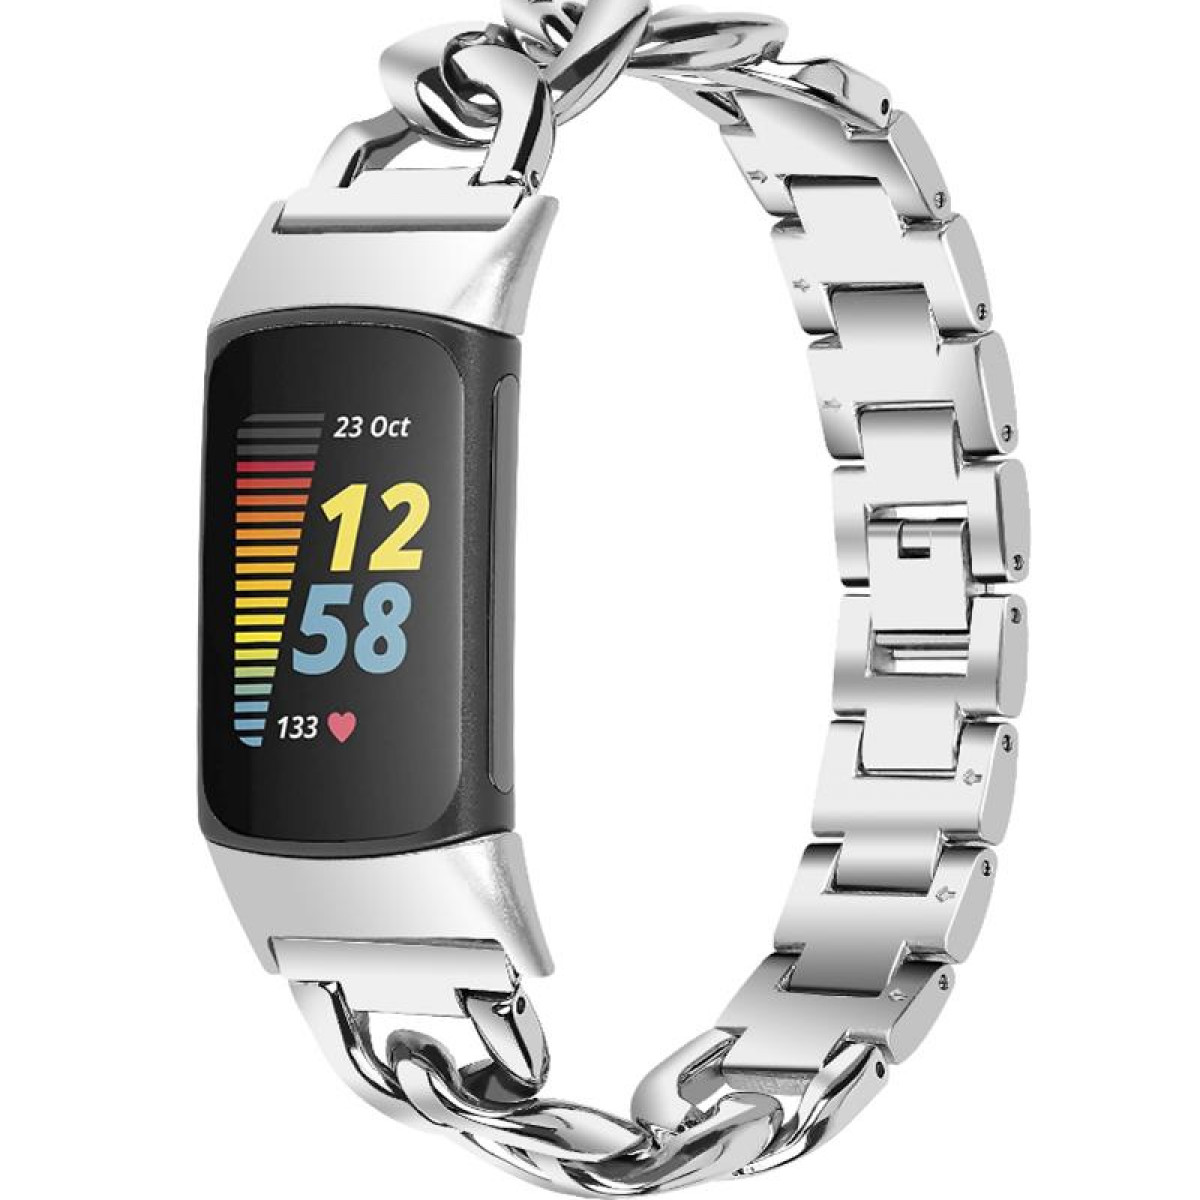 INF Uhrenarmband Fitbit mit Edelstahlsplitter, 3/4, kompatibel Charge Fitbit, Silber 3/4 Charge Ersatzarmband